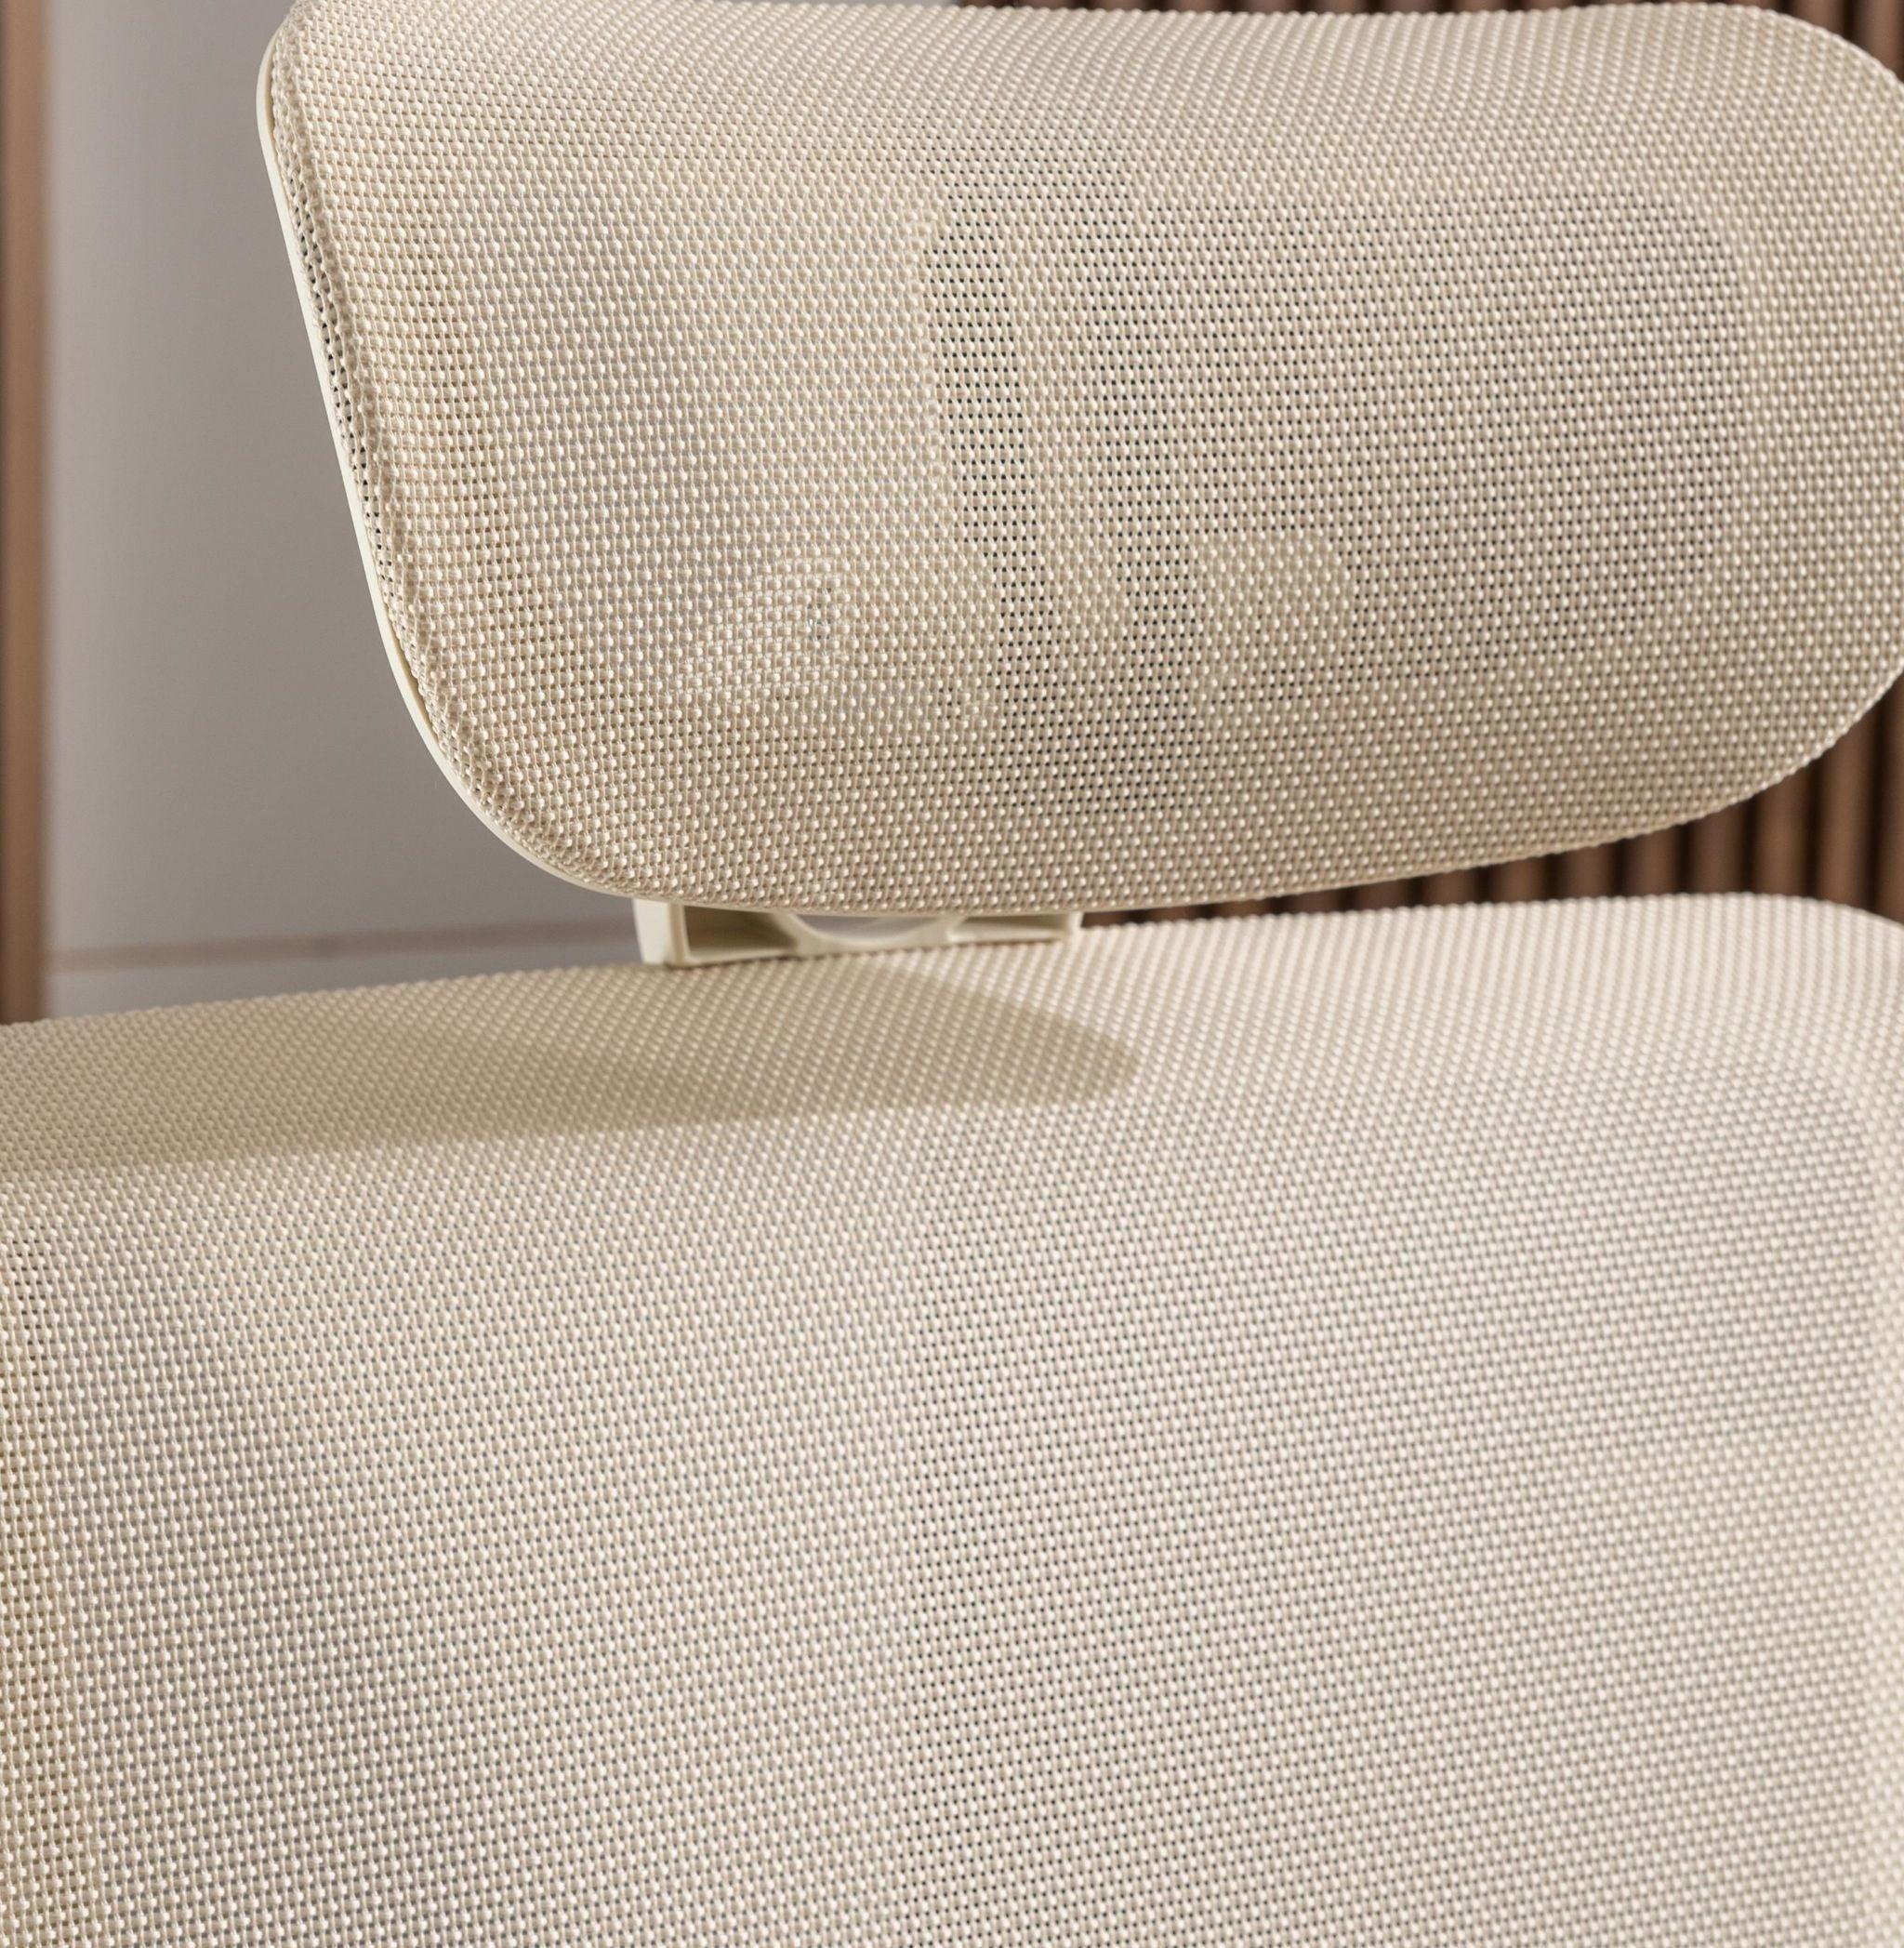 Ergonomic Office Chair Core 3003HBD - Honsit Chair